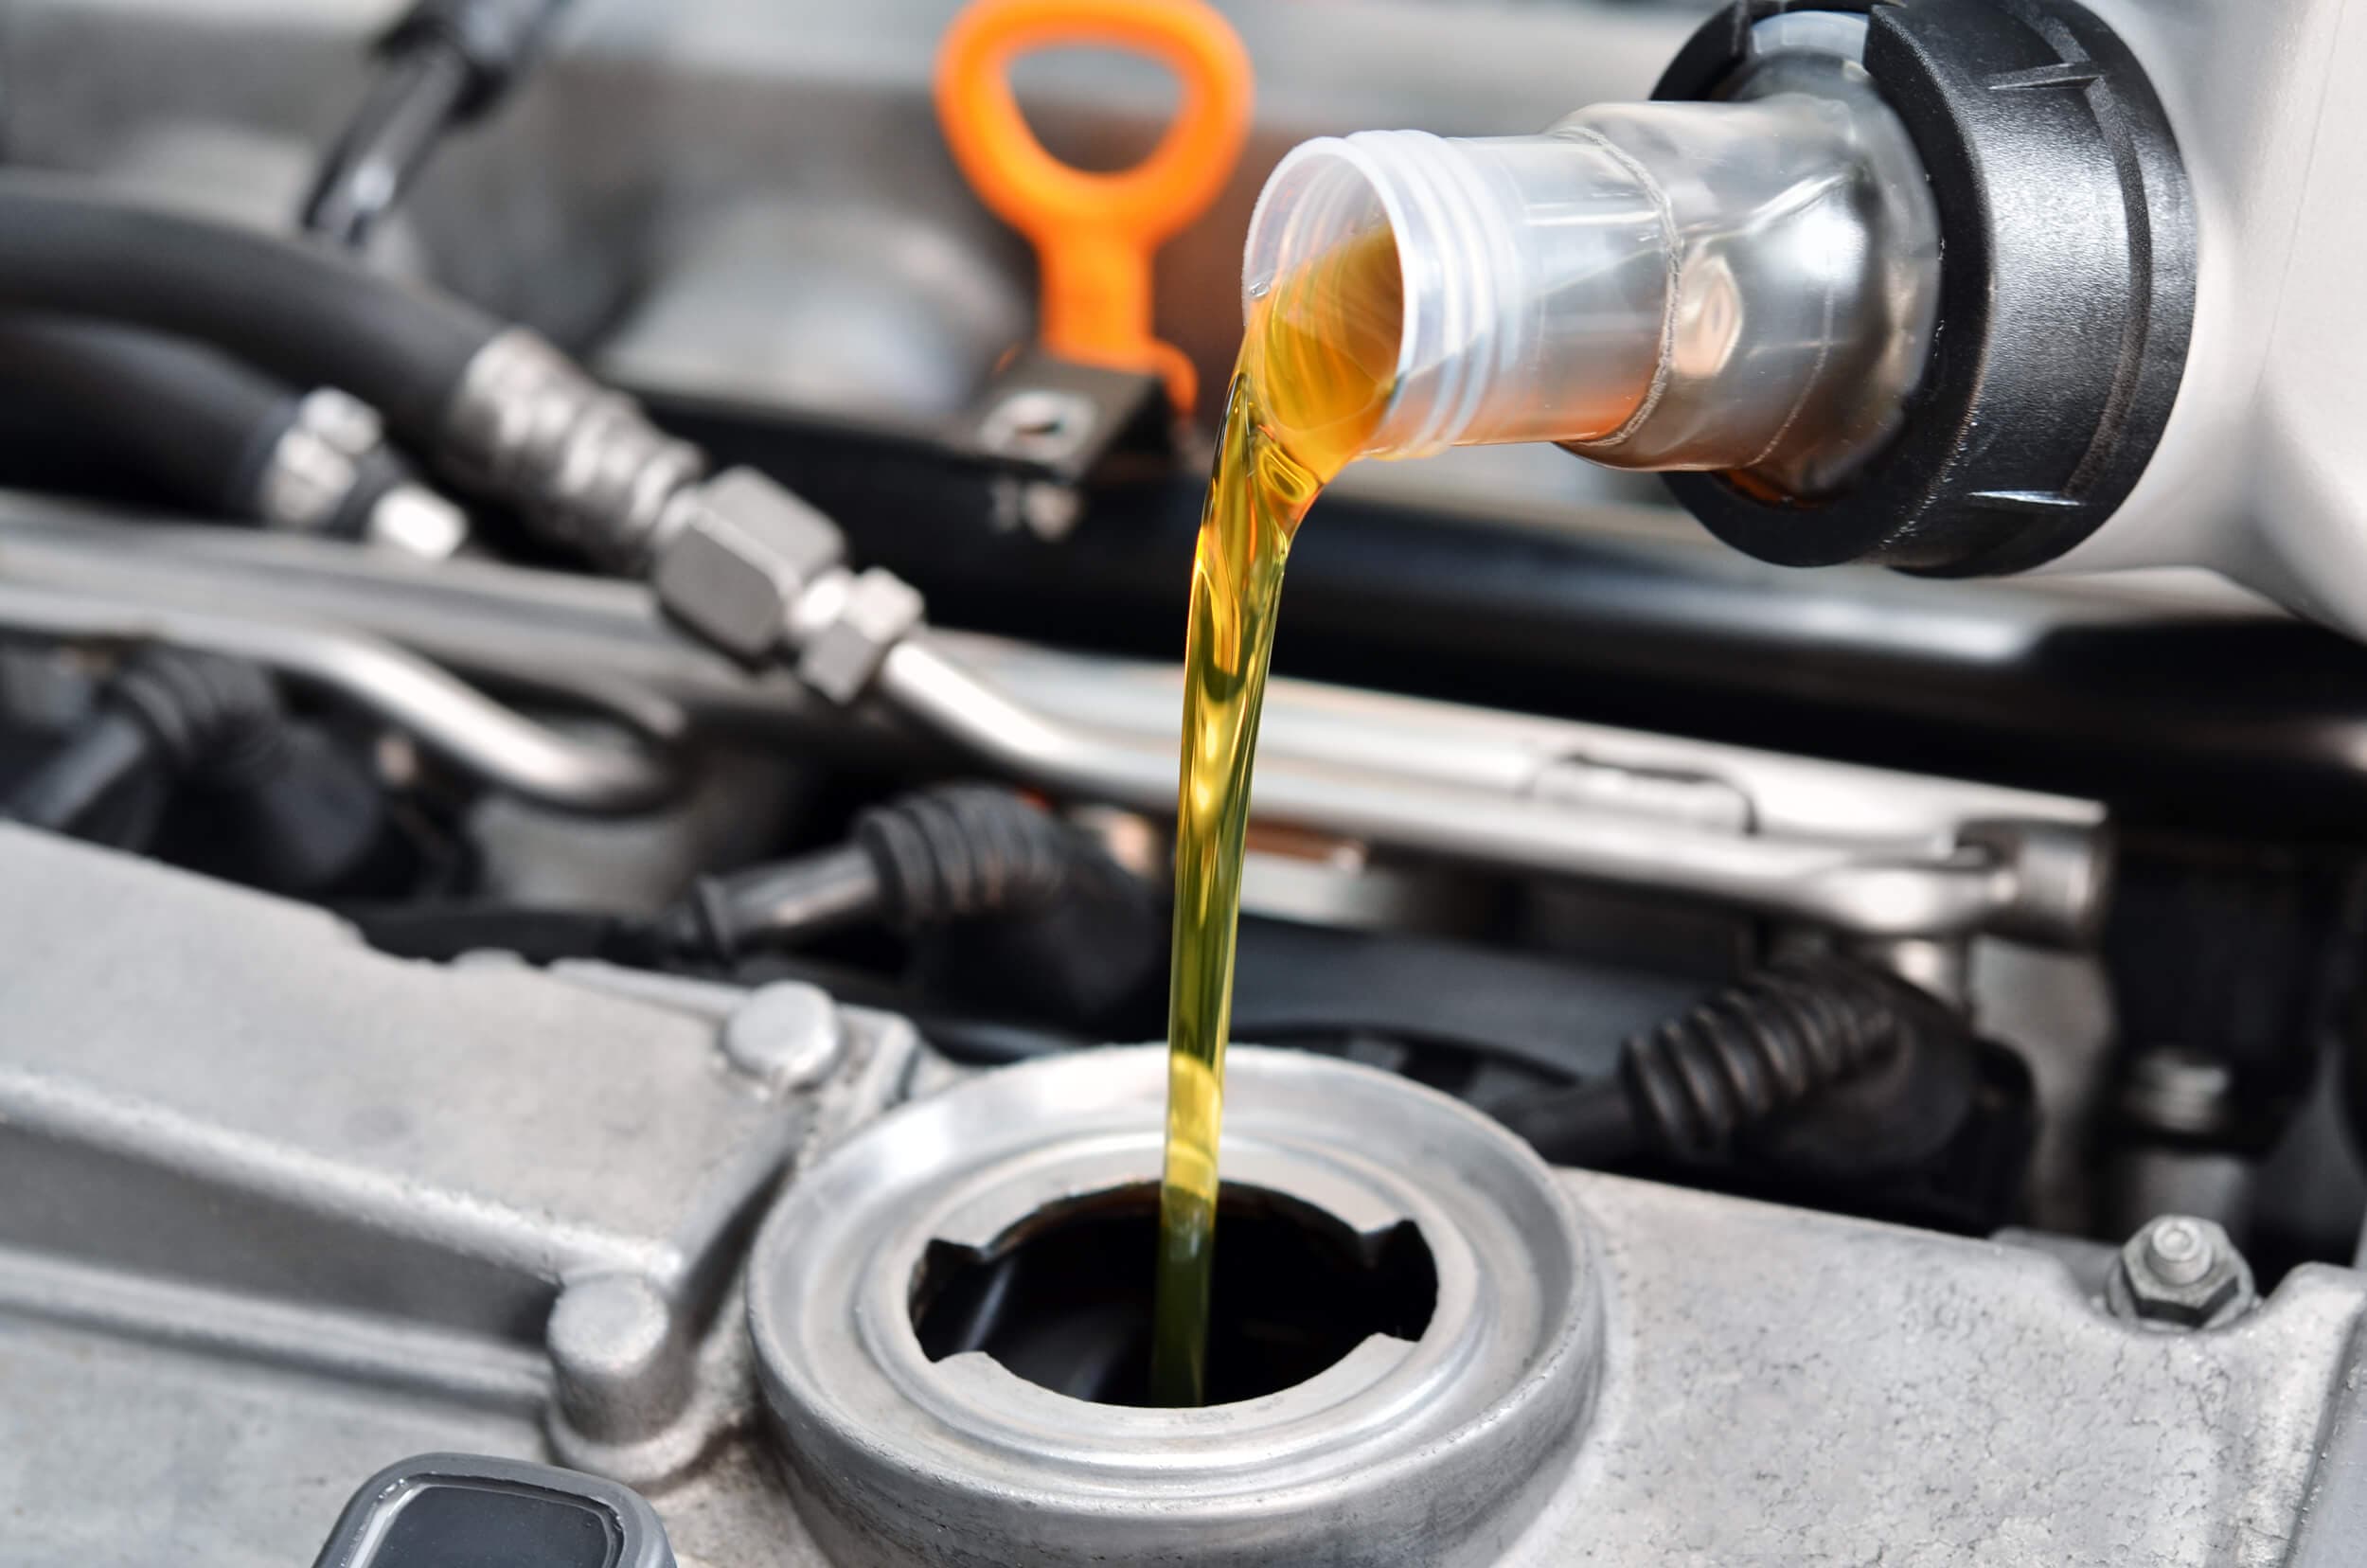 Best ATV Oils: Keep Your Engine Running Smoothly